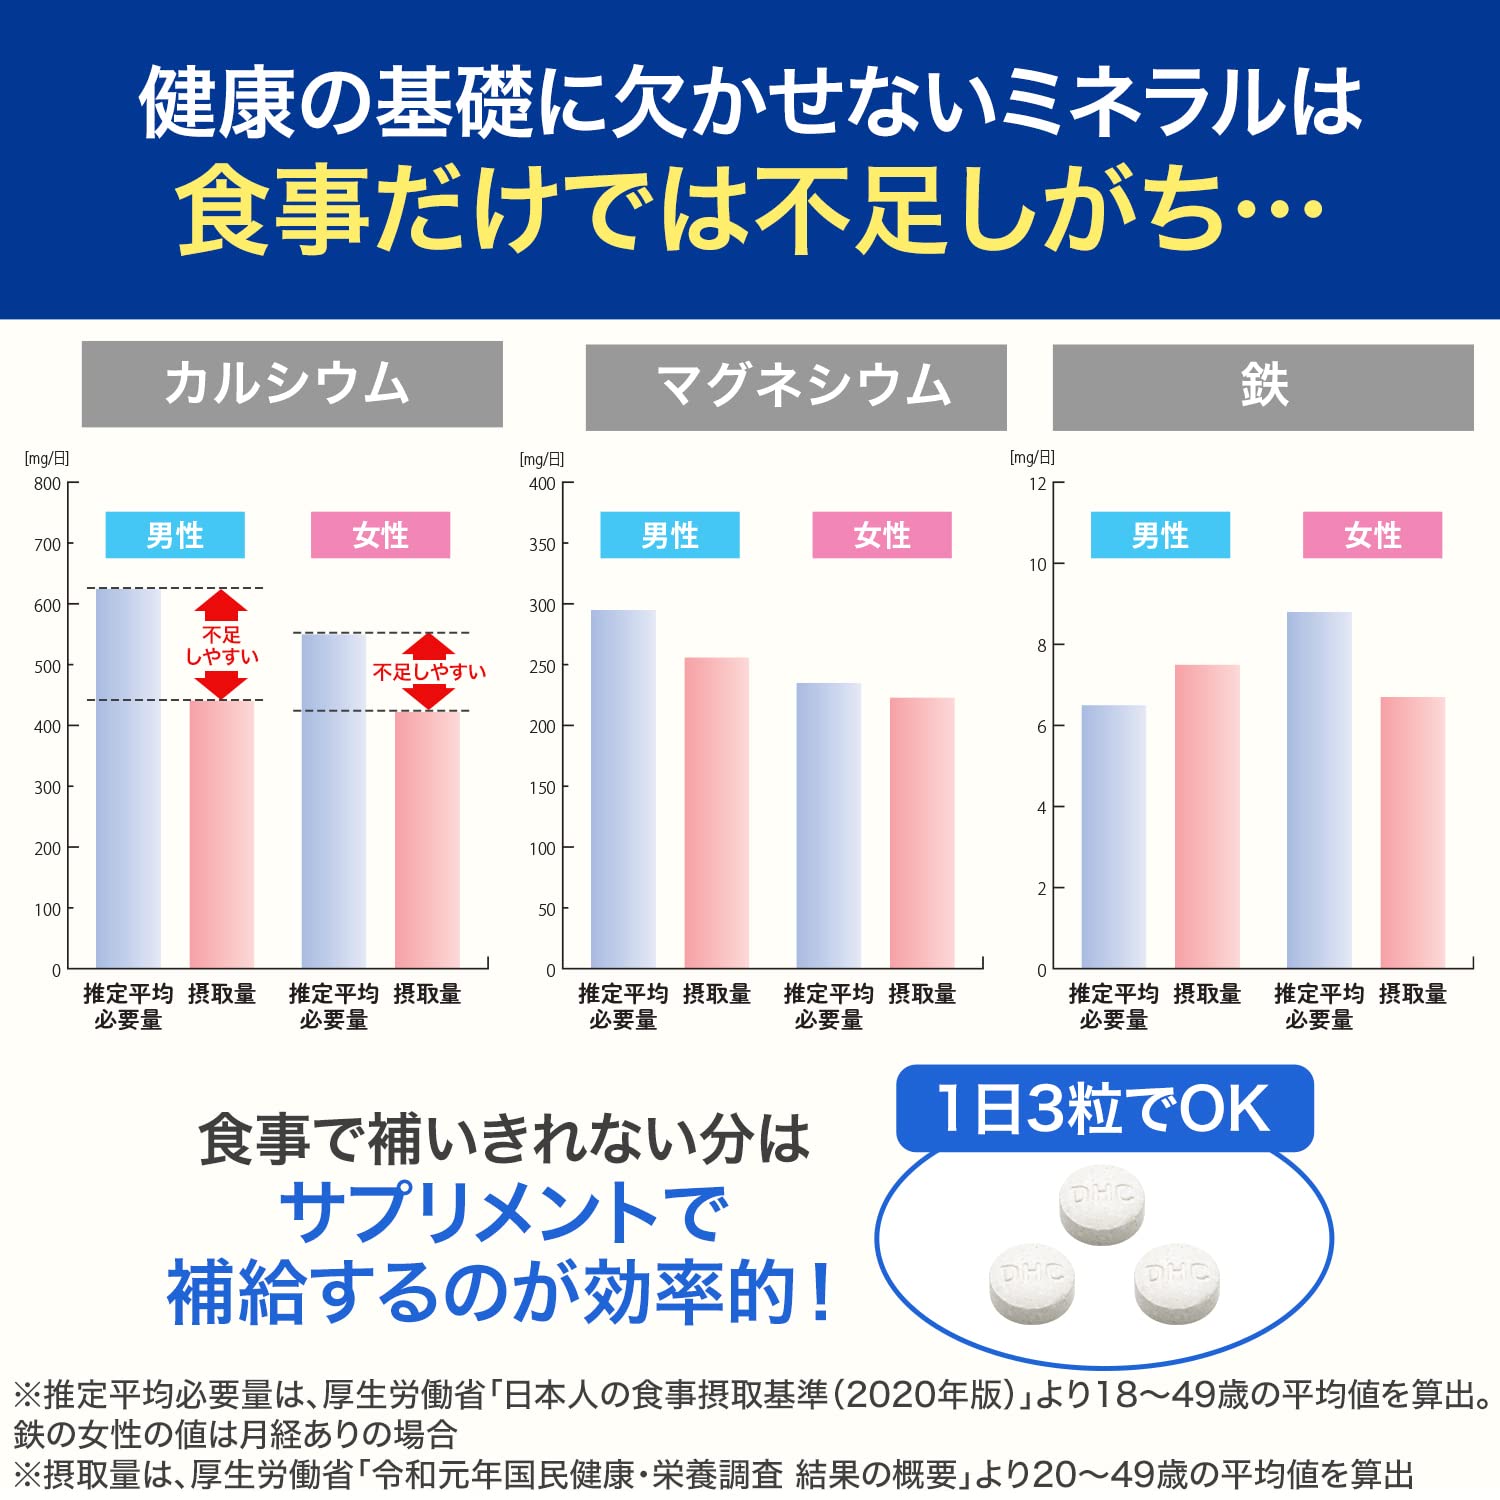 Mua DHC マルチミネラル 90日分 trên Amazon Nhật chính hãng 2022 | Fado